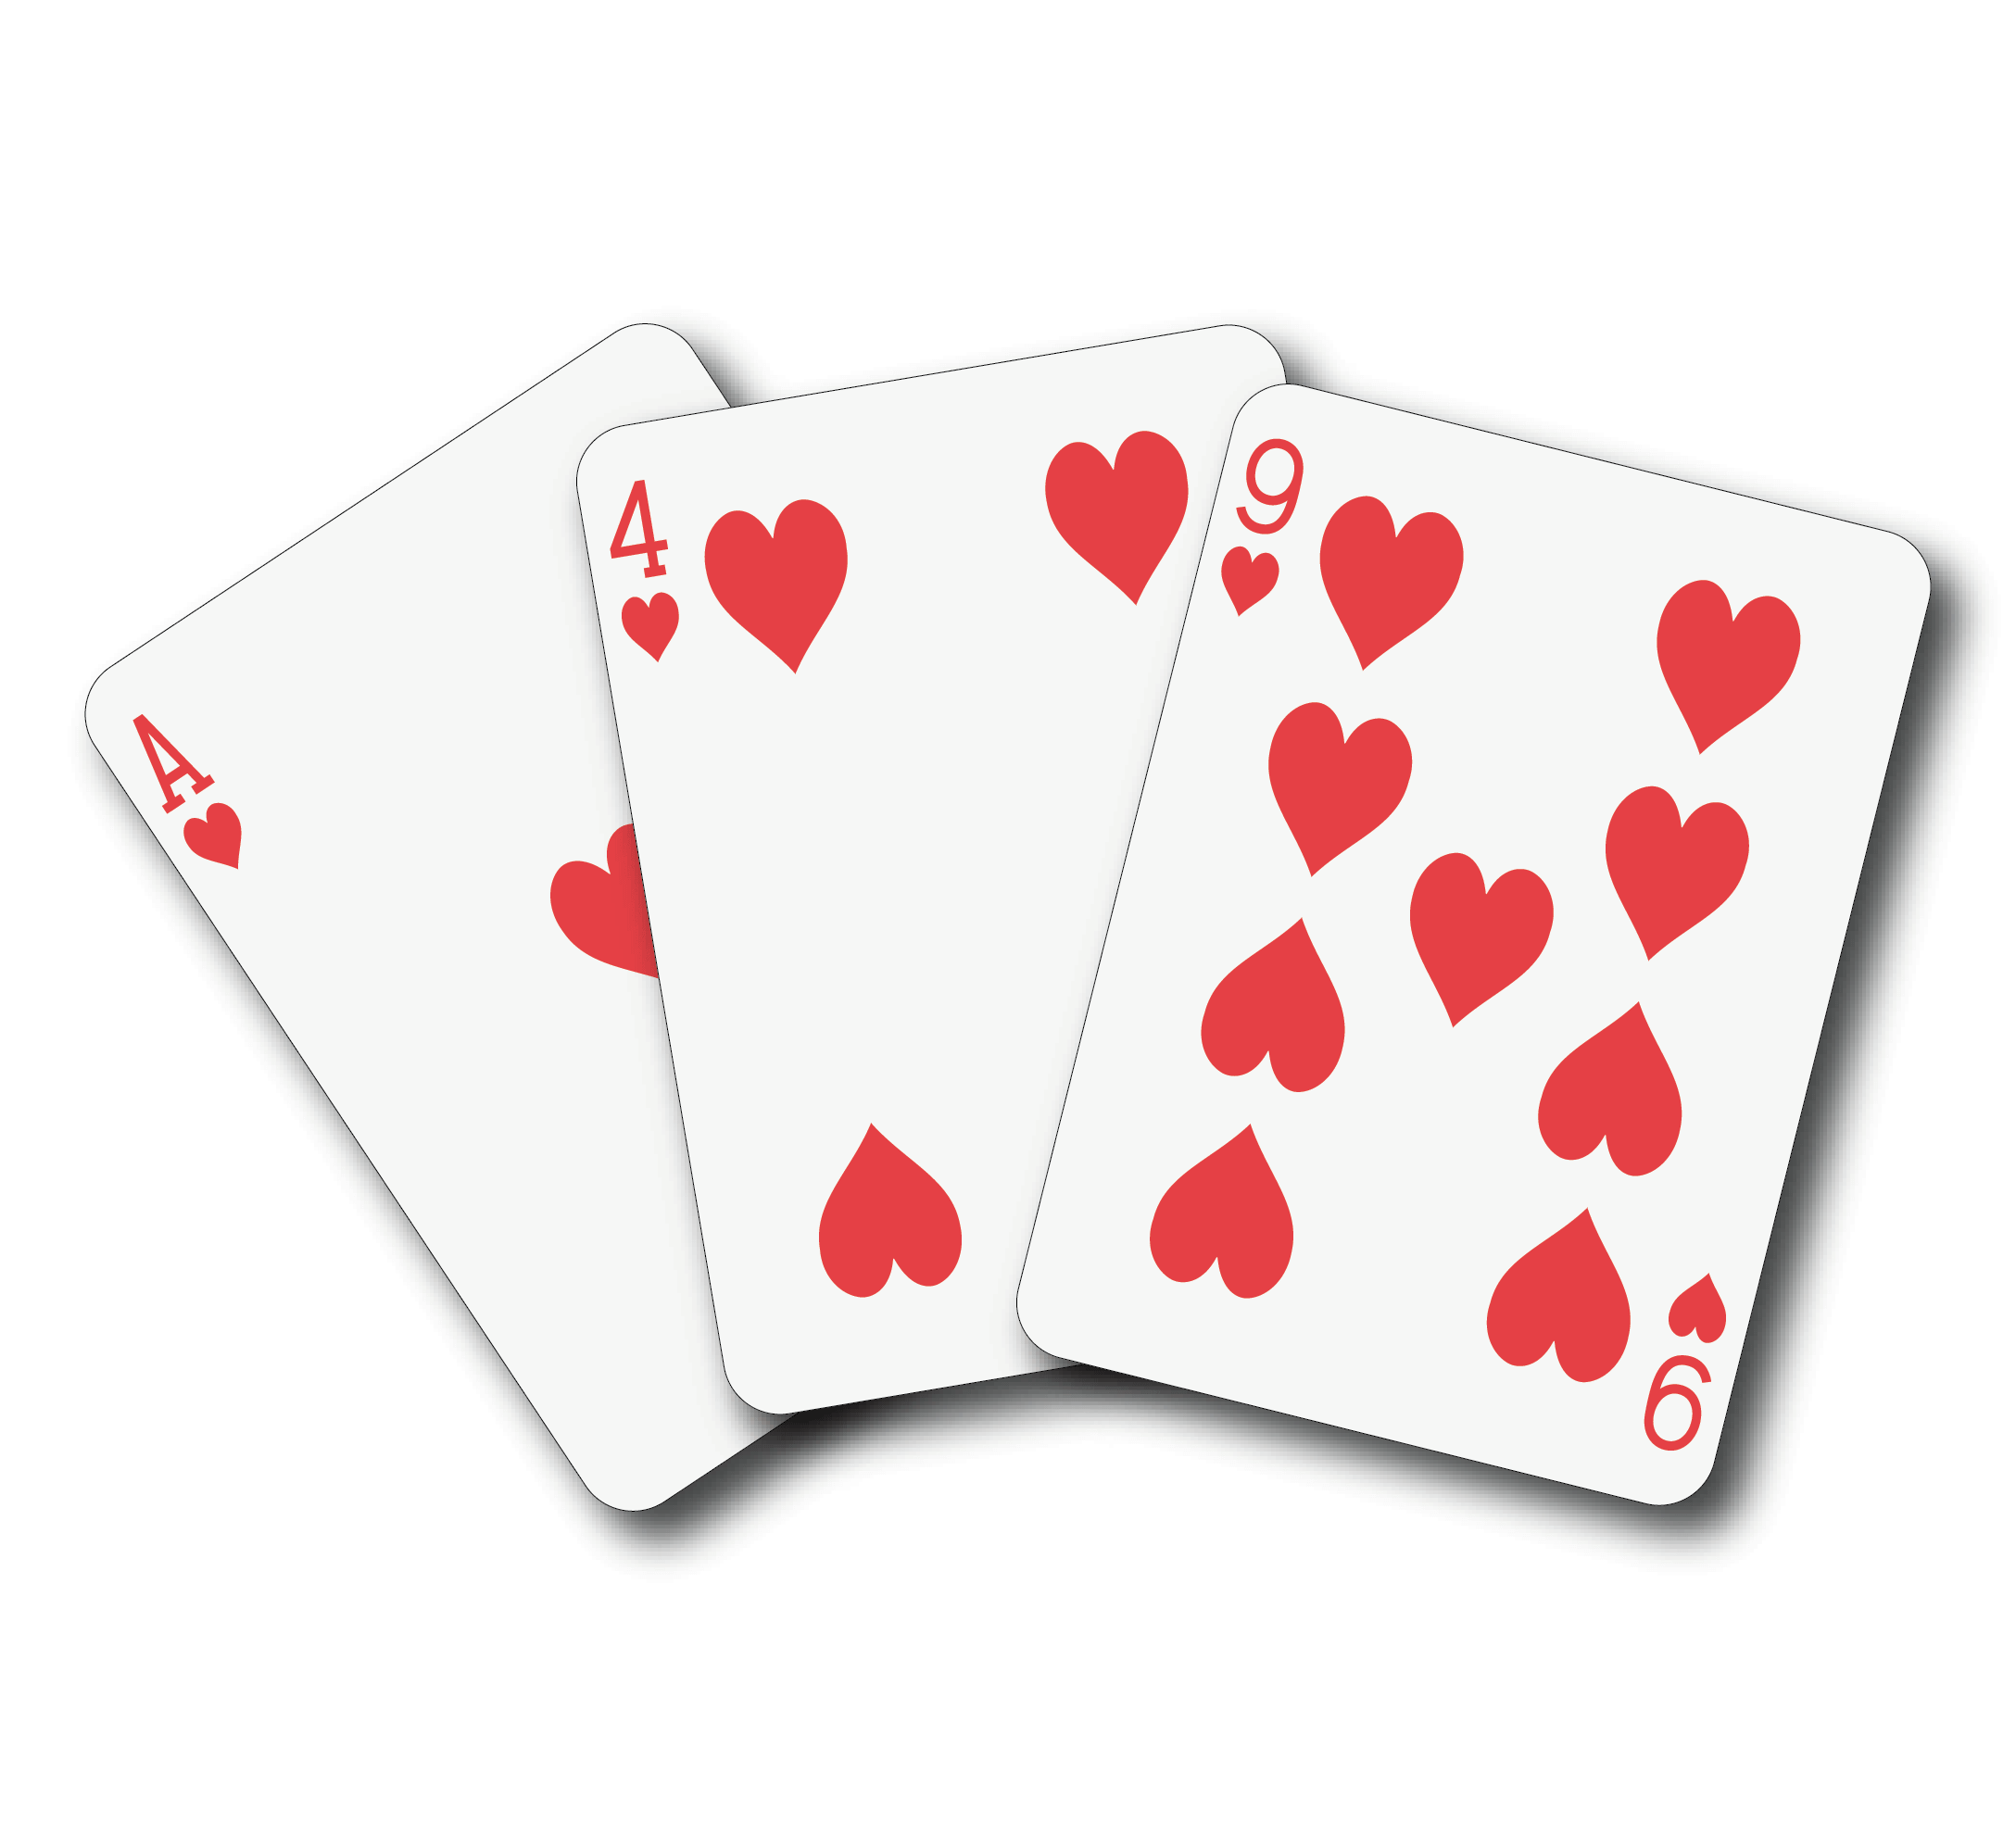 Basic Rules of Poker - Hearts